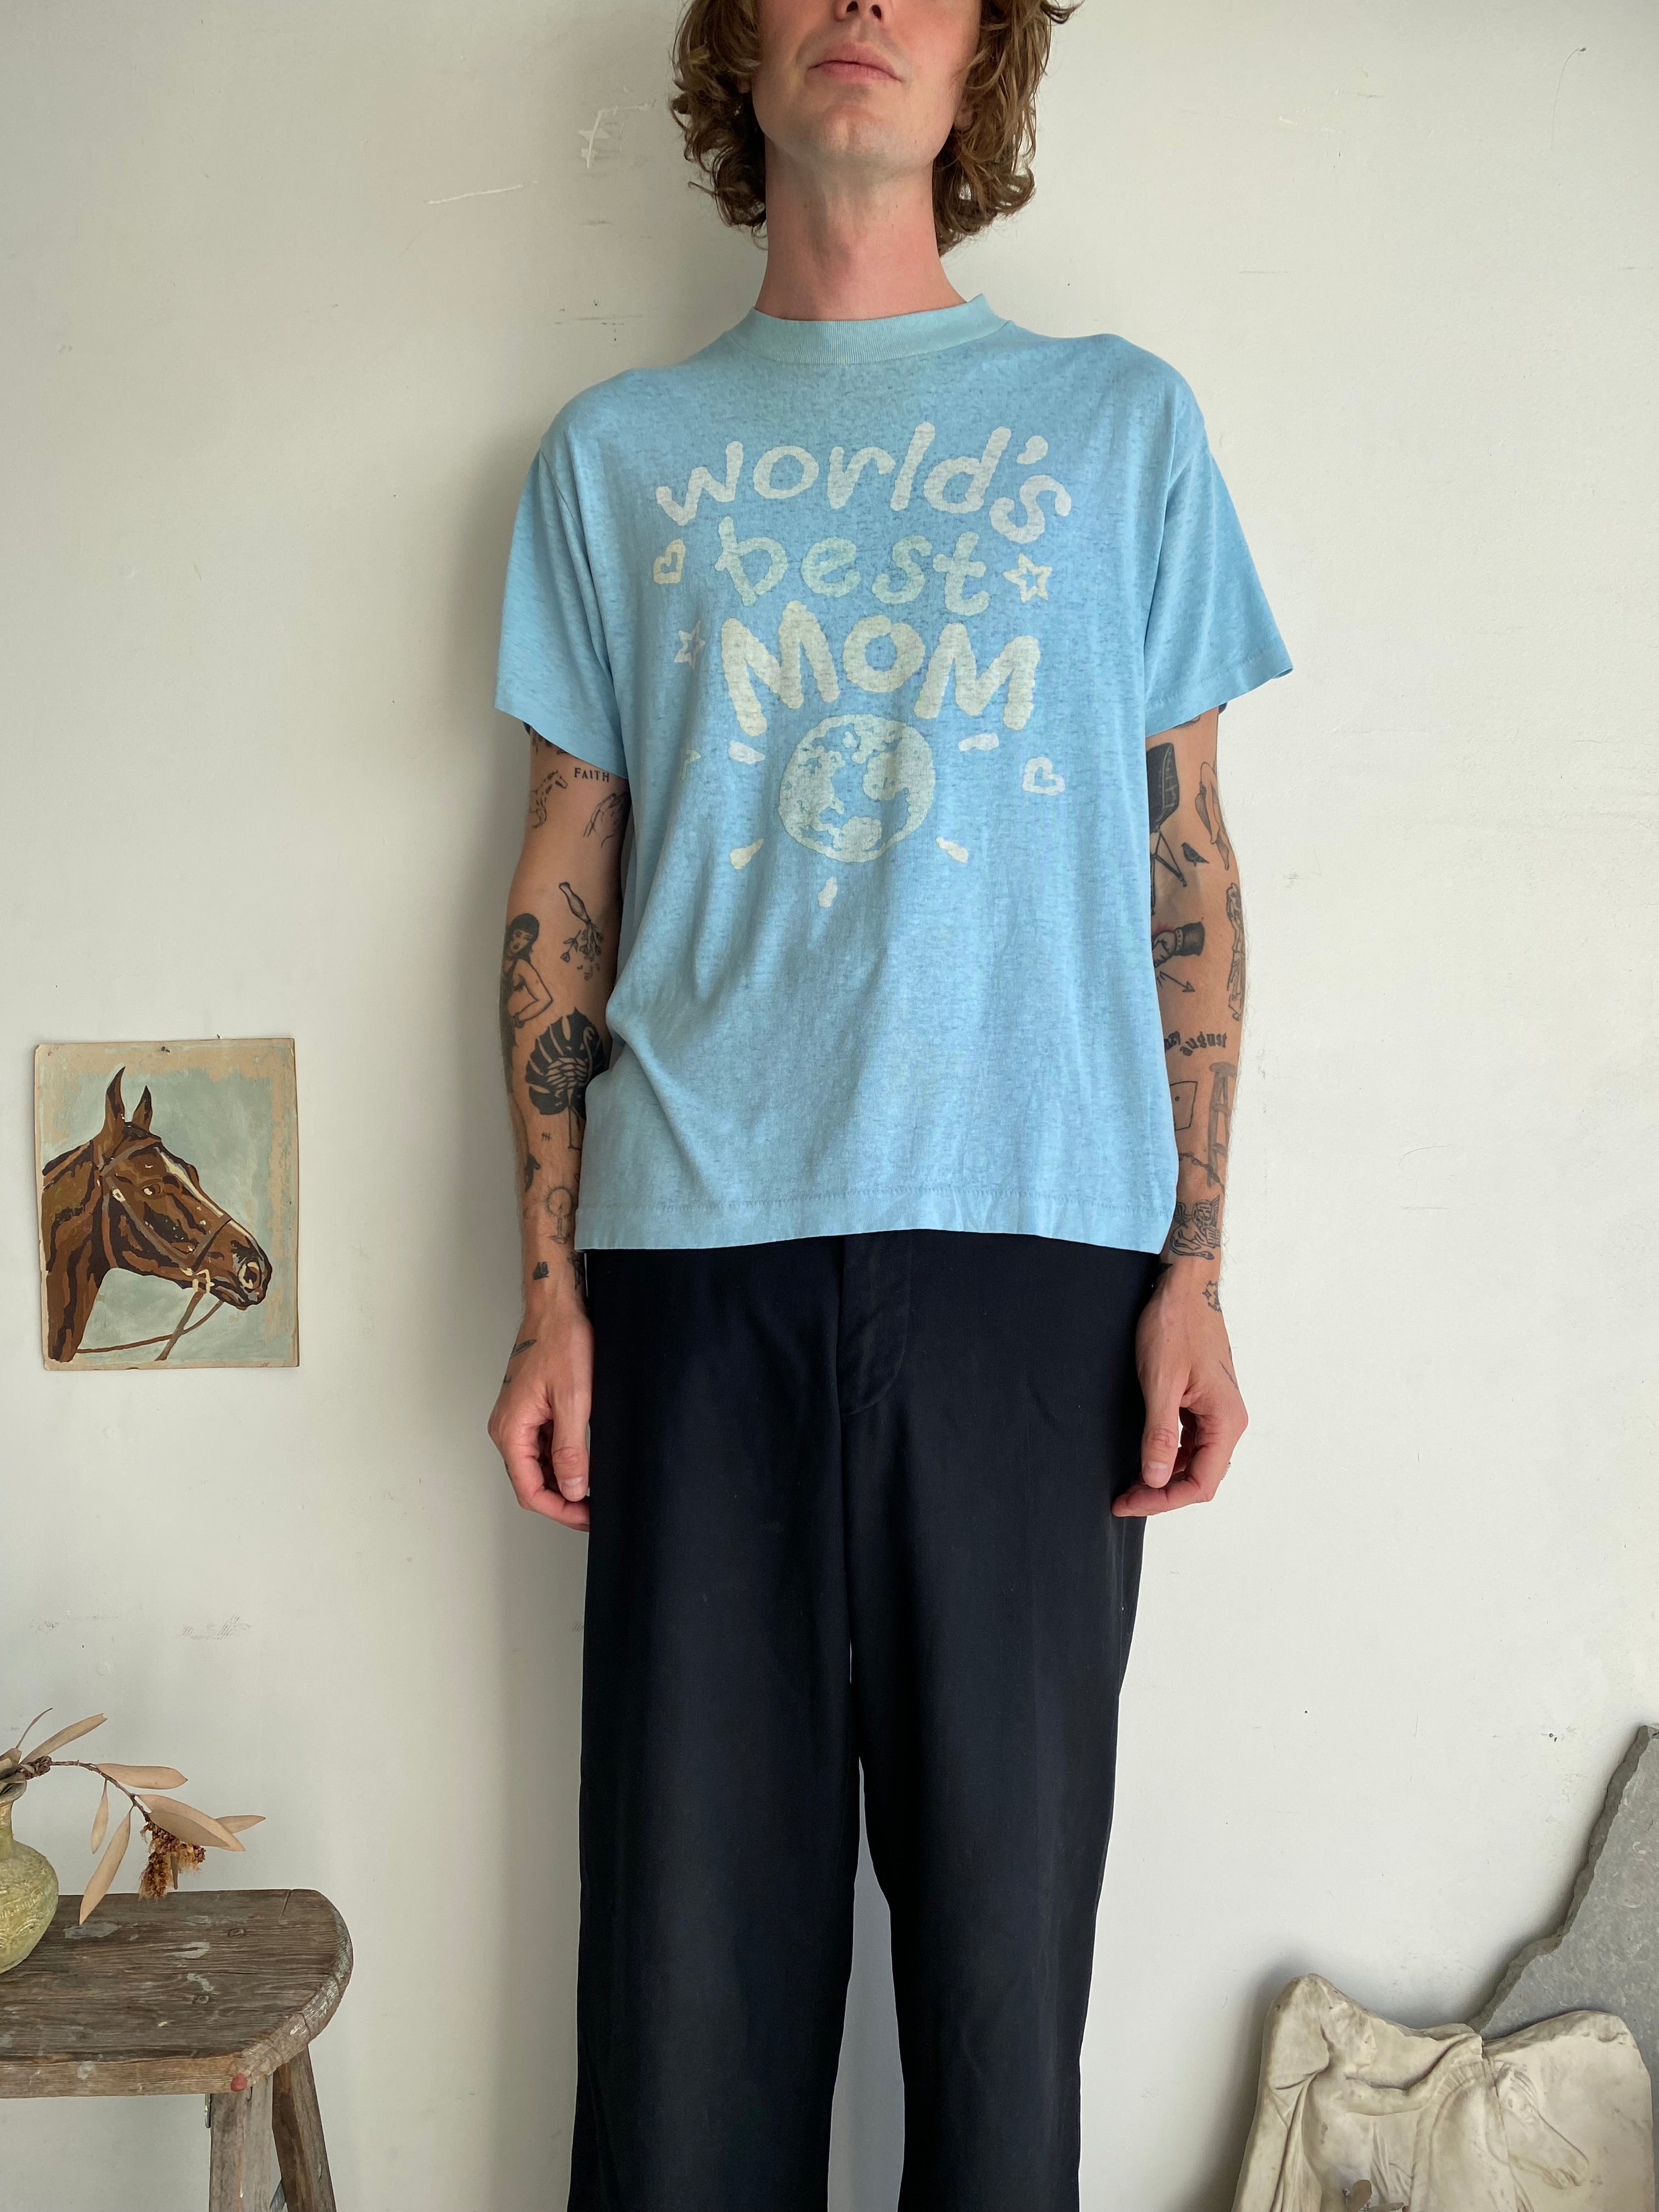 1980s Well-Worn World's Best Mom T-Shirt (L)